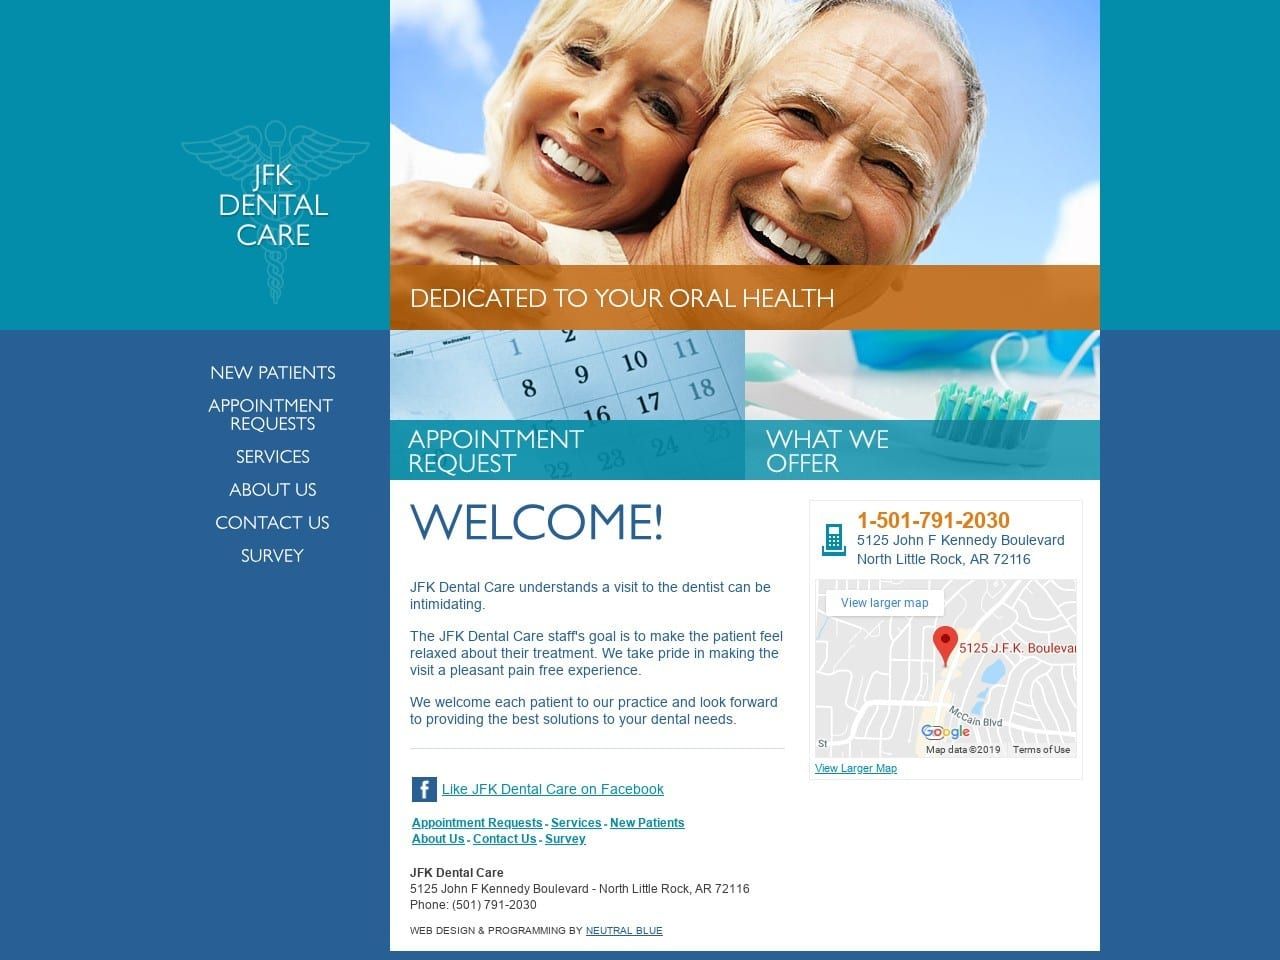 JFK Dental Care Website Screenshot from jfkdentalnlr.com